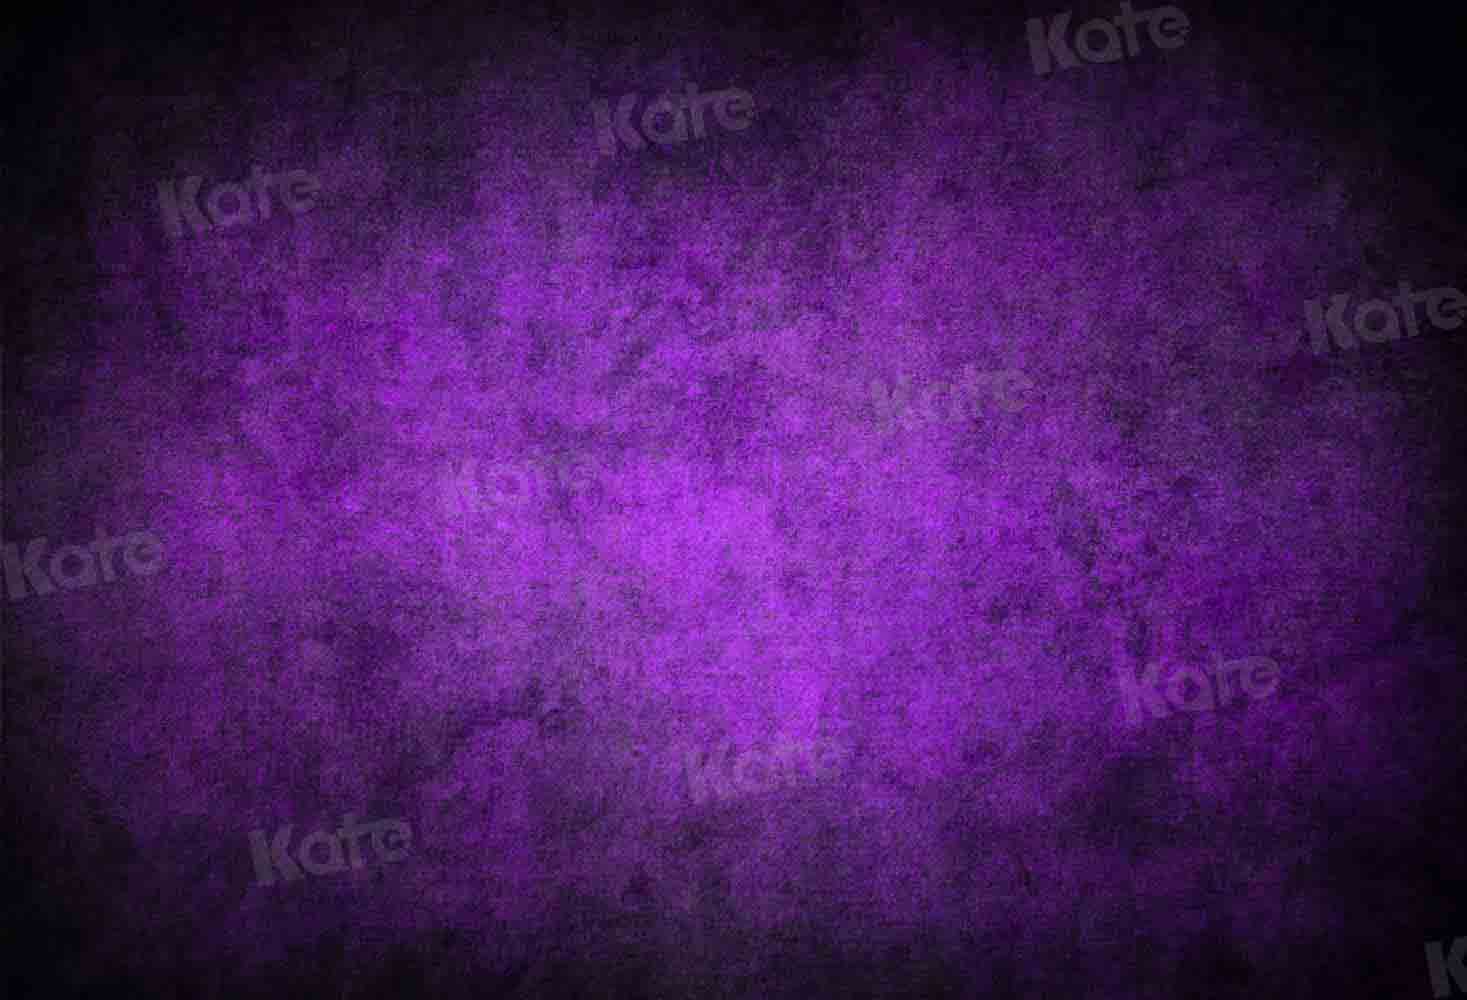 Kate Abstrakter lila Hintergrund Porträt